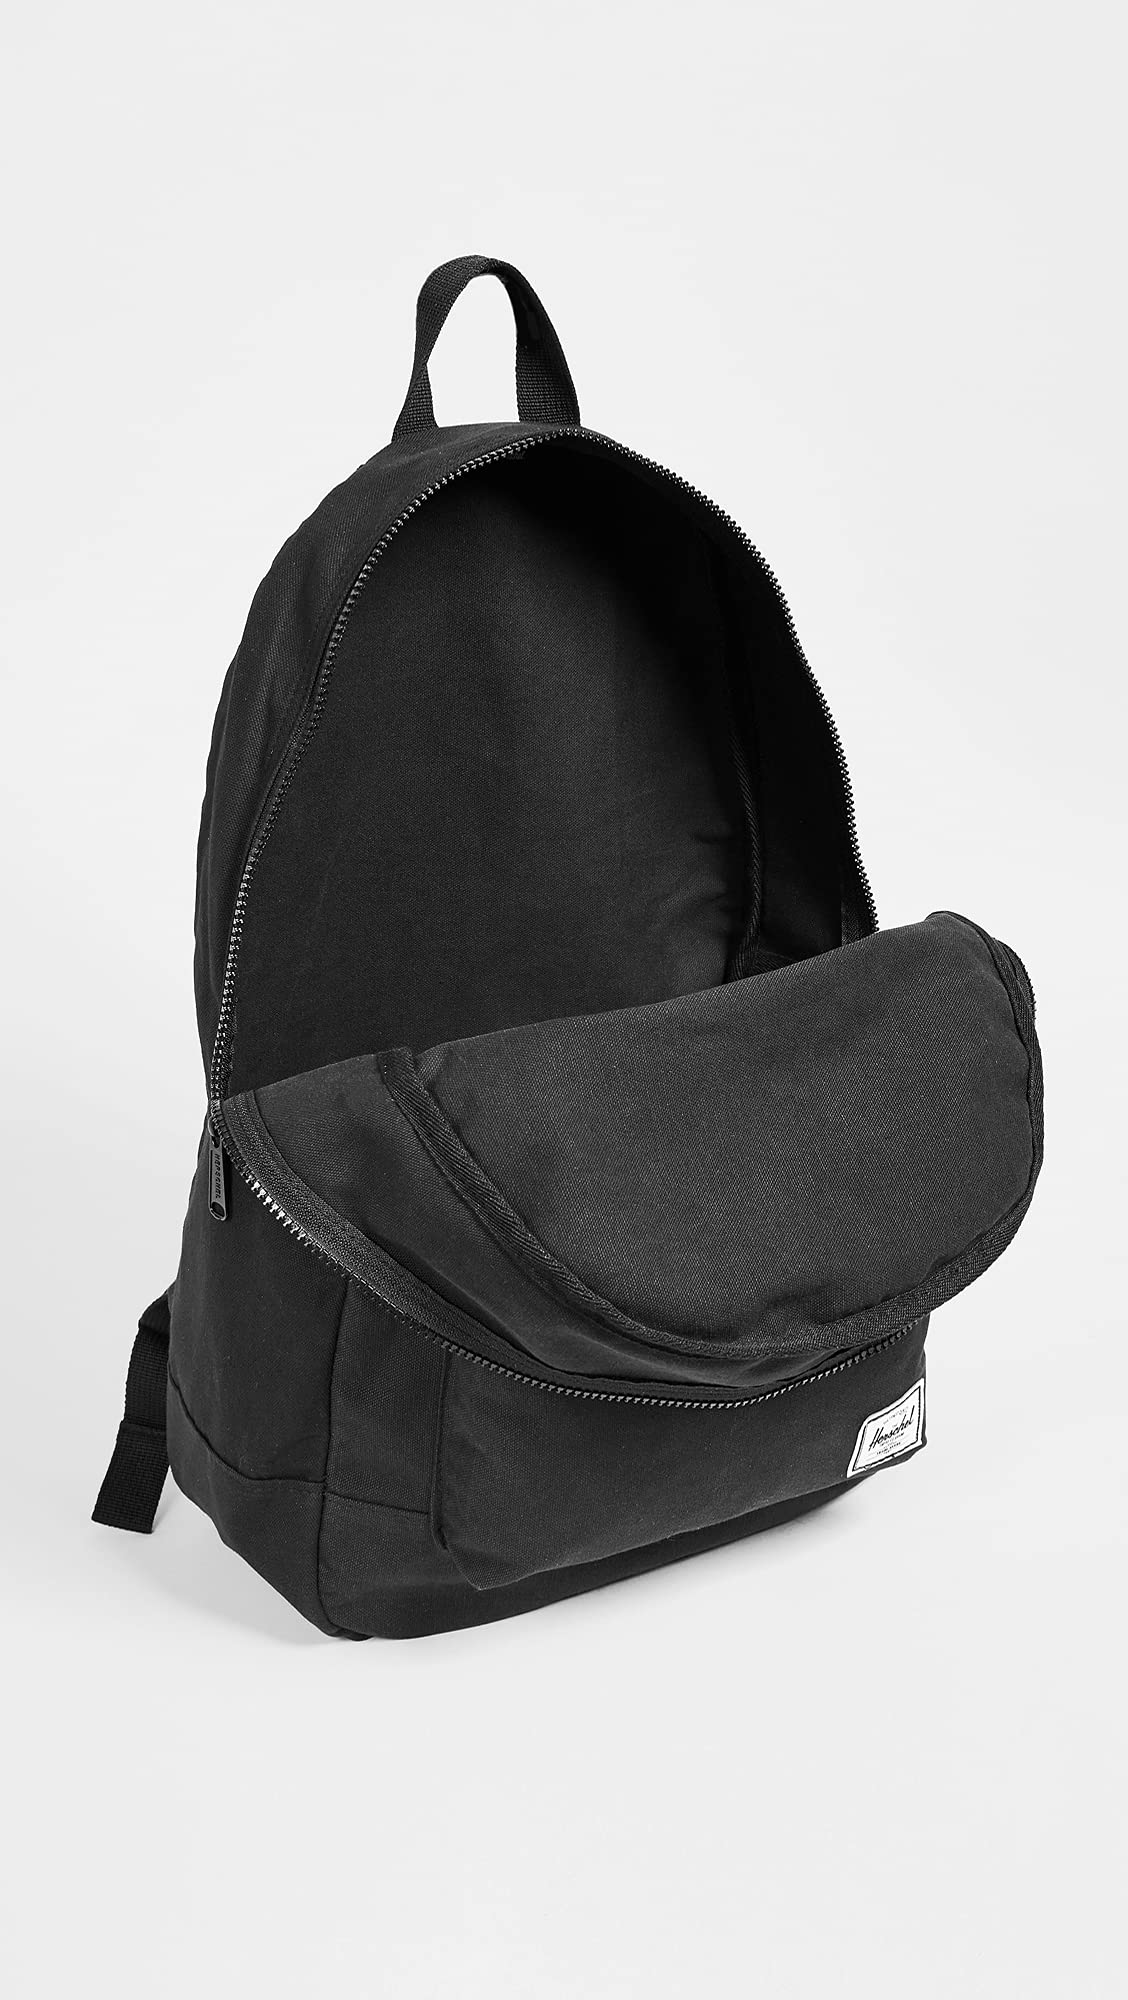 Herschel Supply Co.-Women's Daypack Backpack, Black, One Size